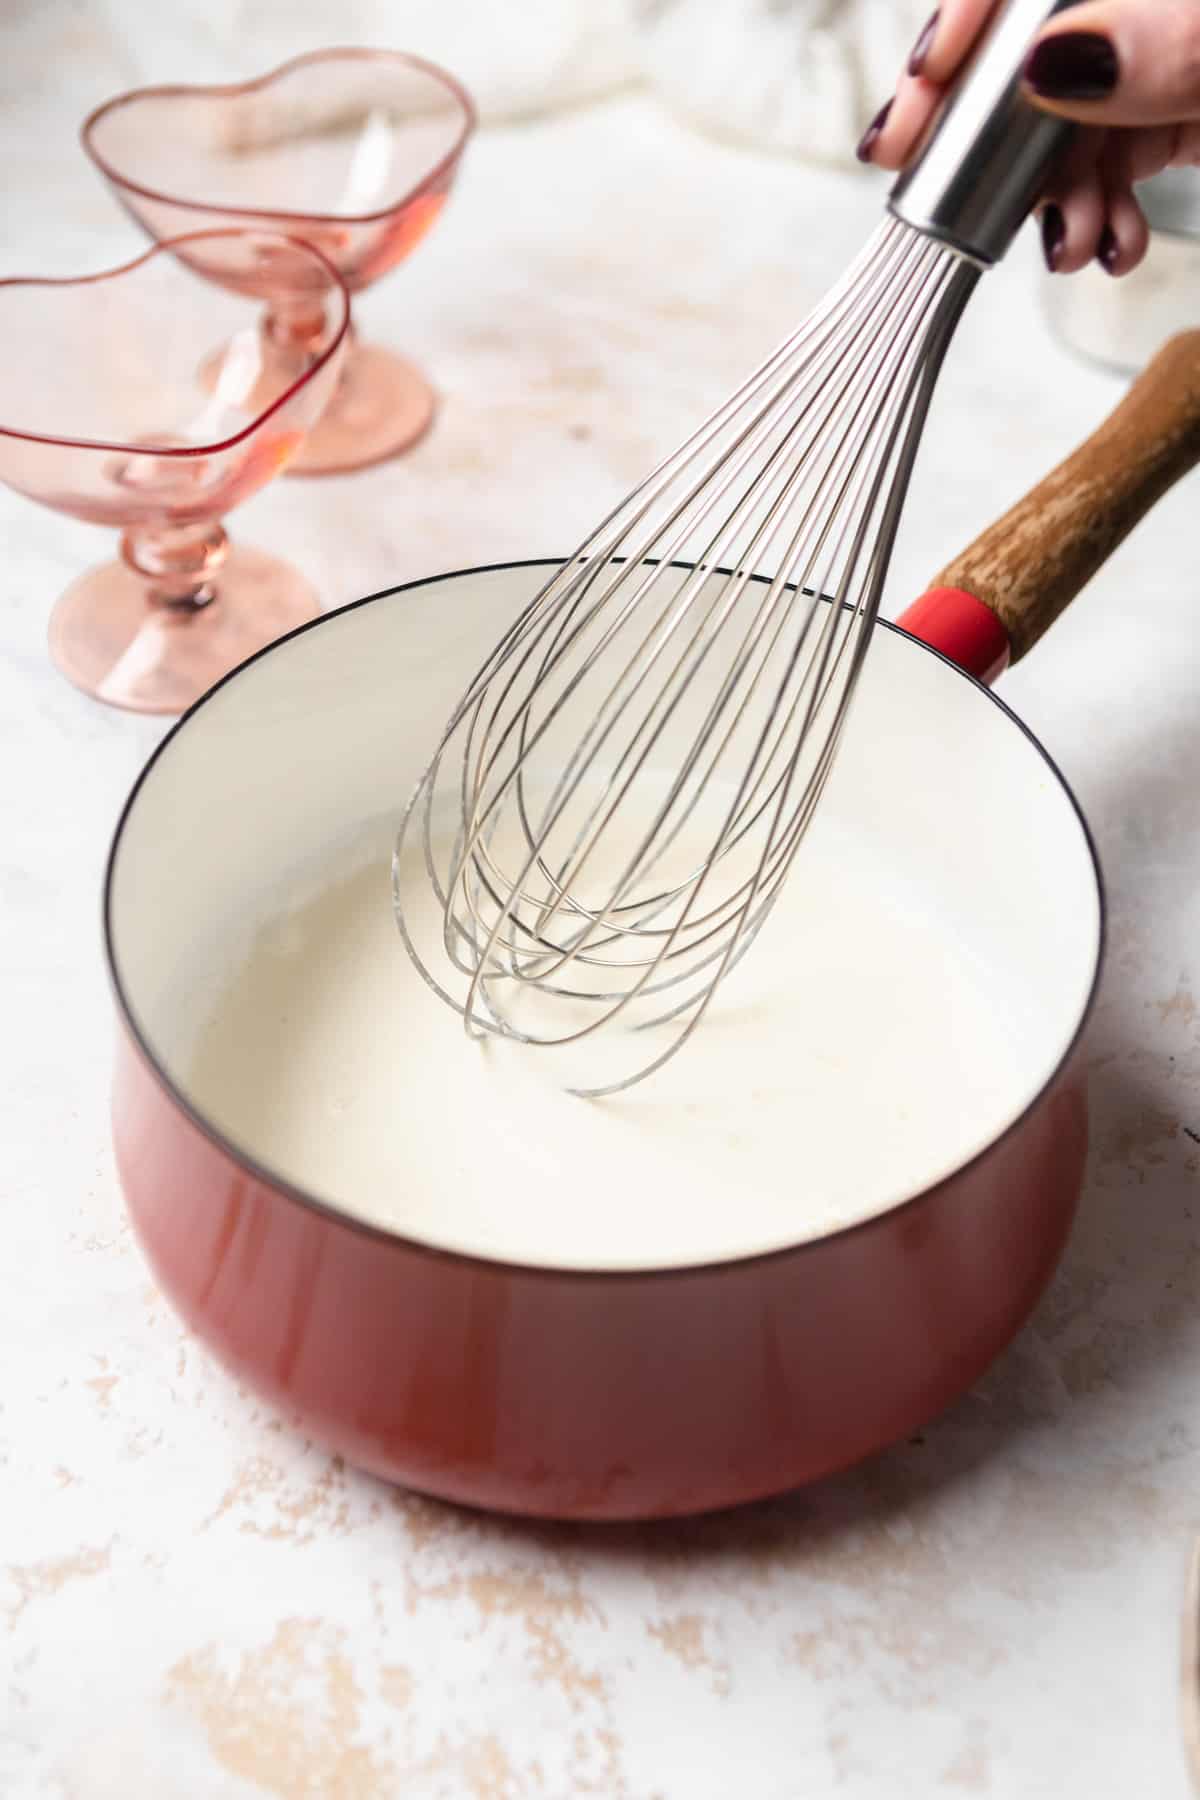 Heavy cream in a saucepan.